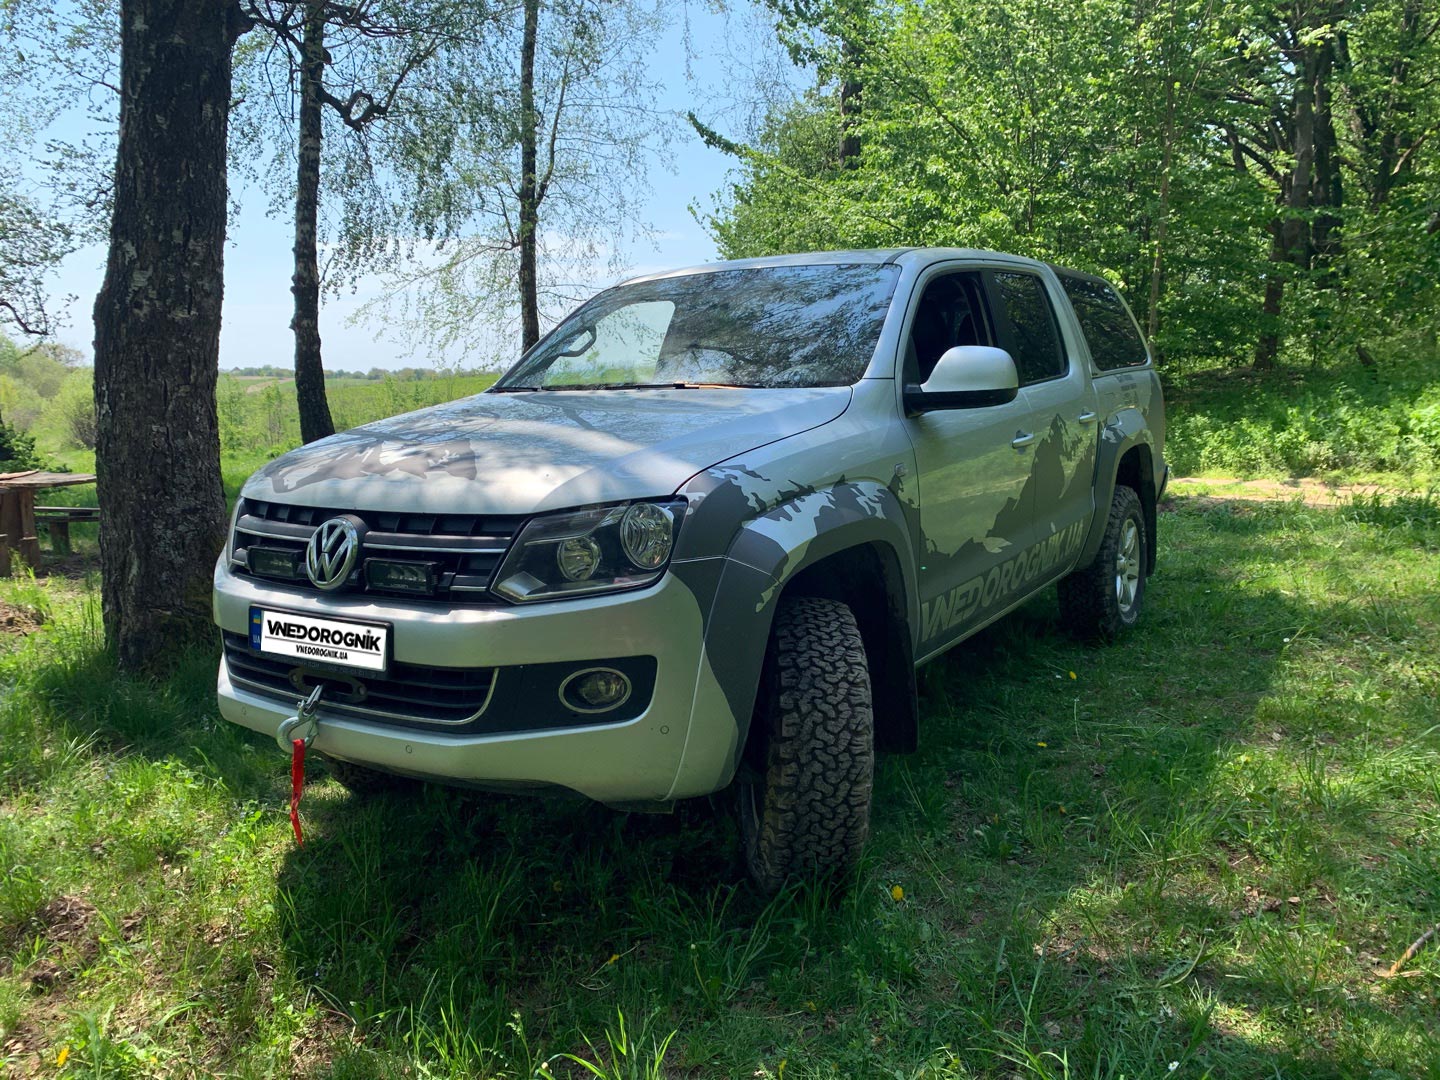 Volkswagen AMAROK Tuning Photo from Vnedorognik Team